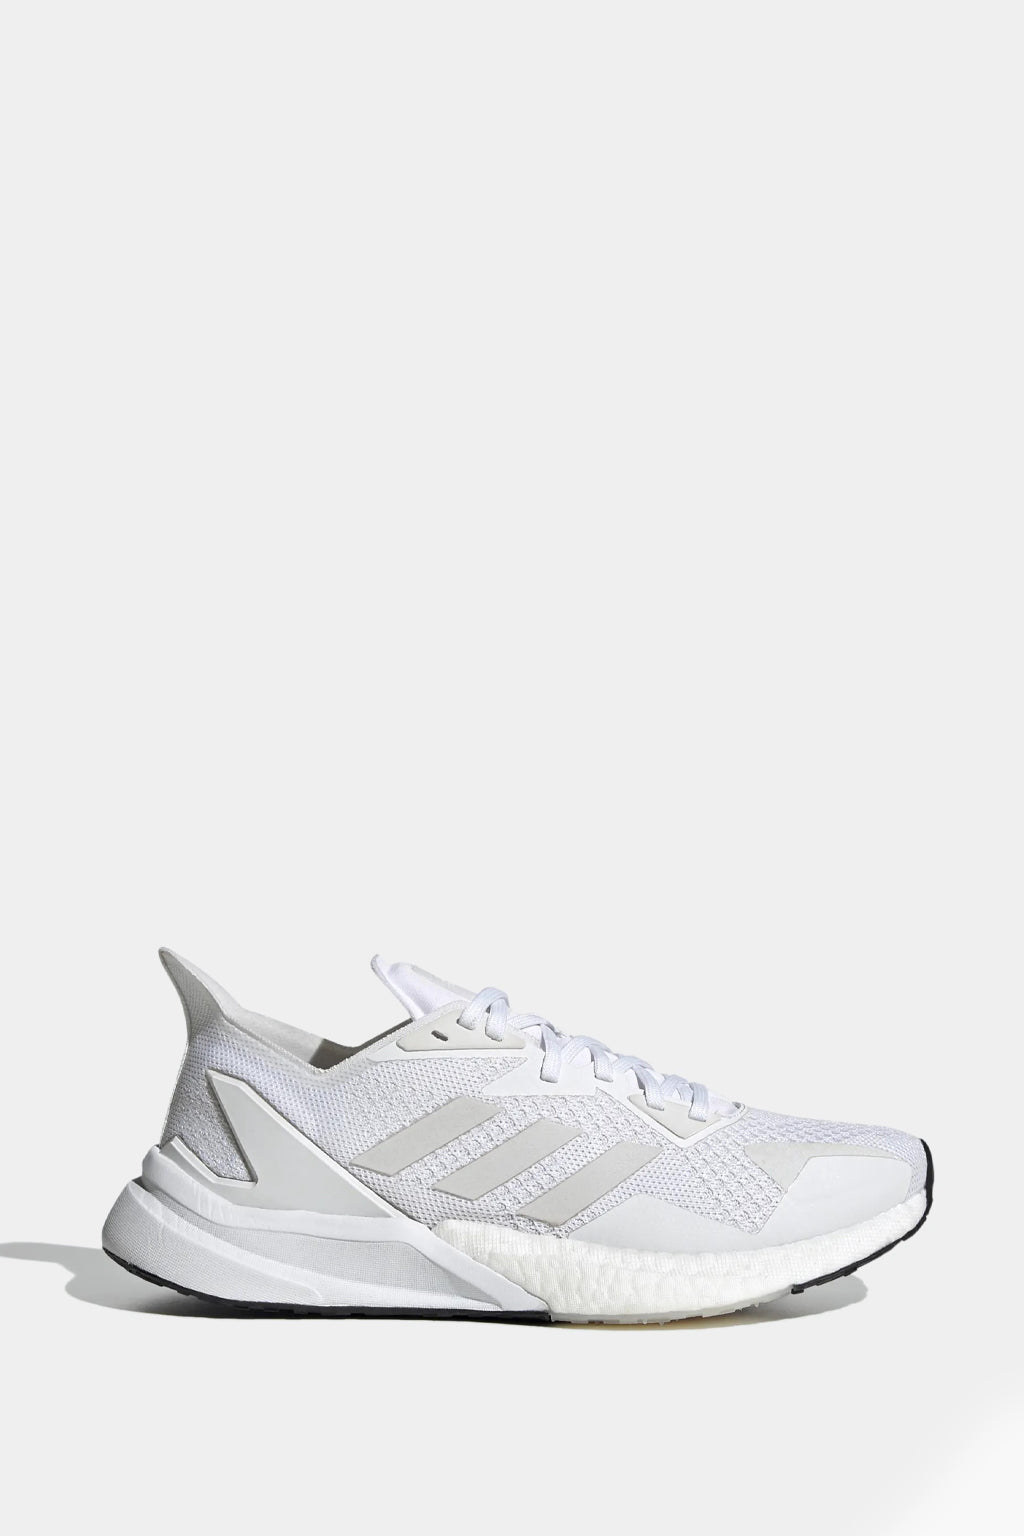 Adidas - Running Shoes